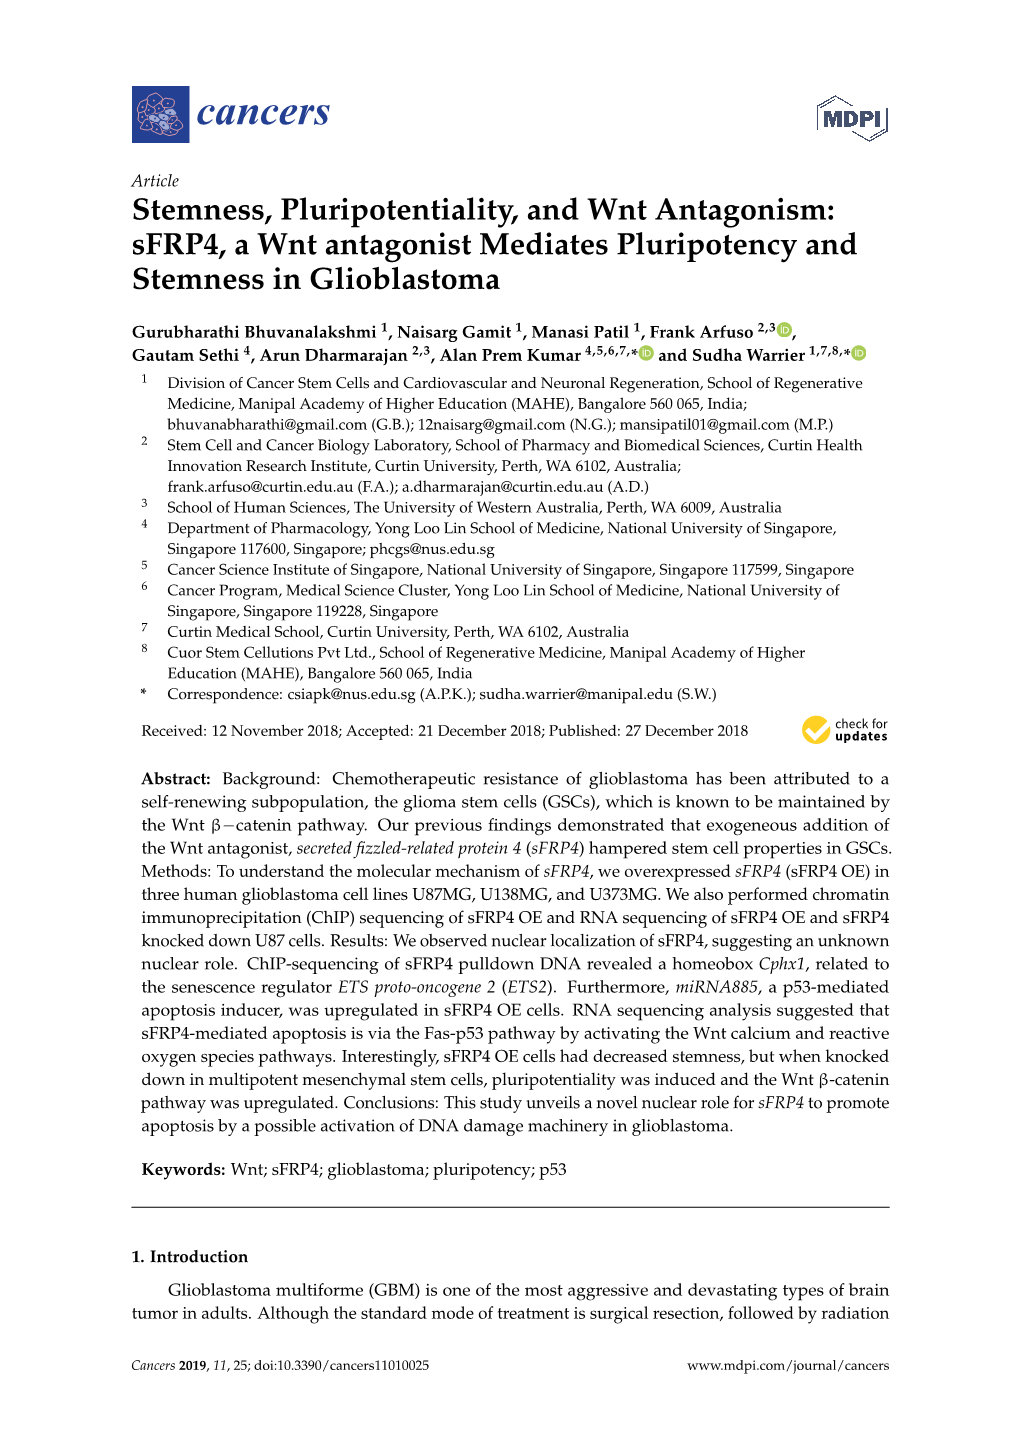 Sfrp4, a Wnt Antagonist Mediates Pluripotency and Stemness in Glioblastoma